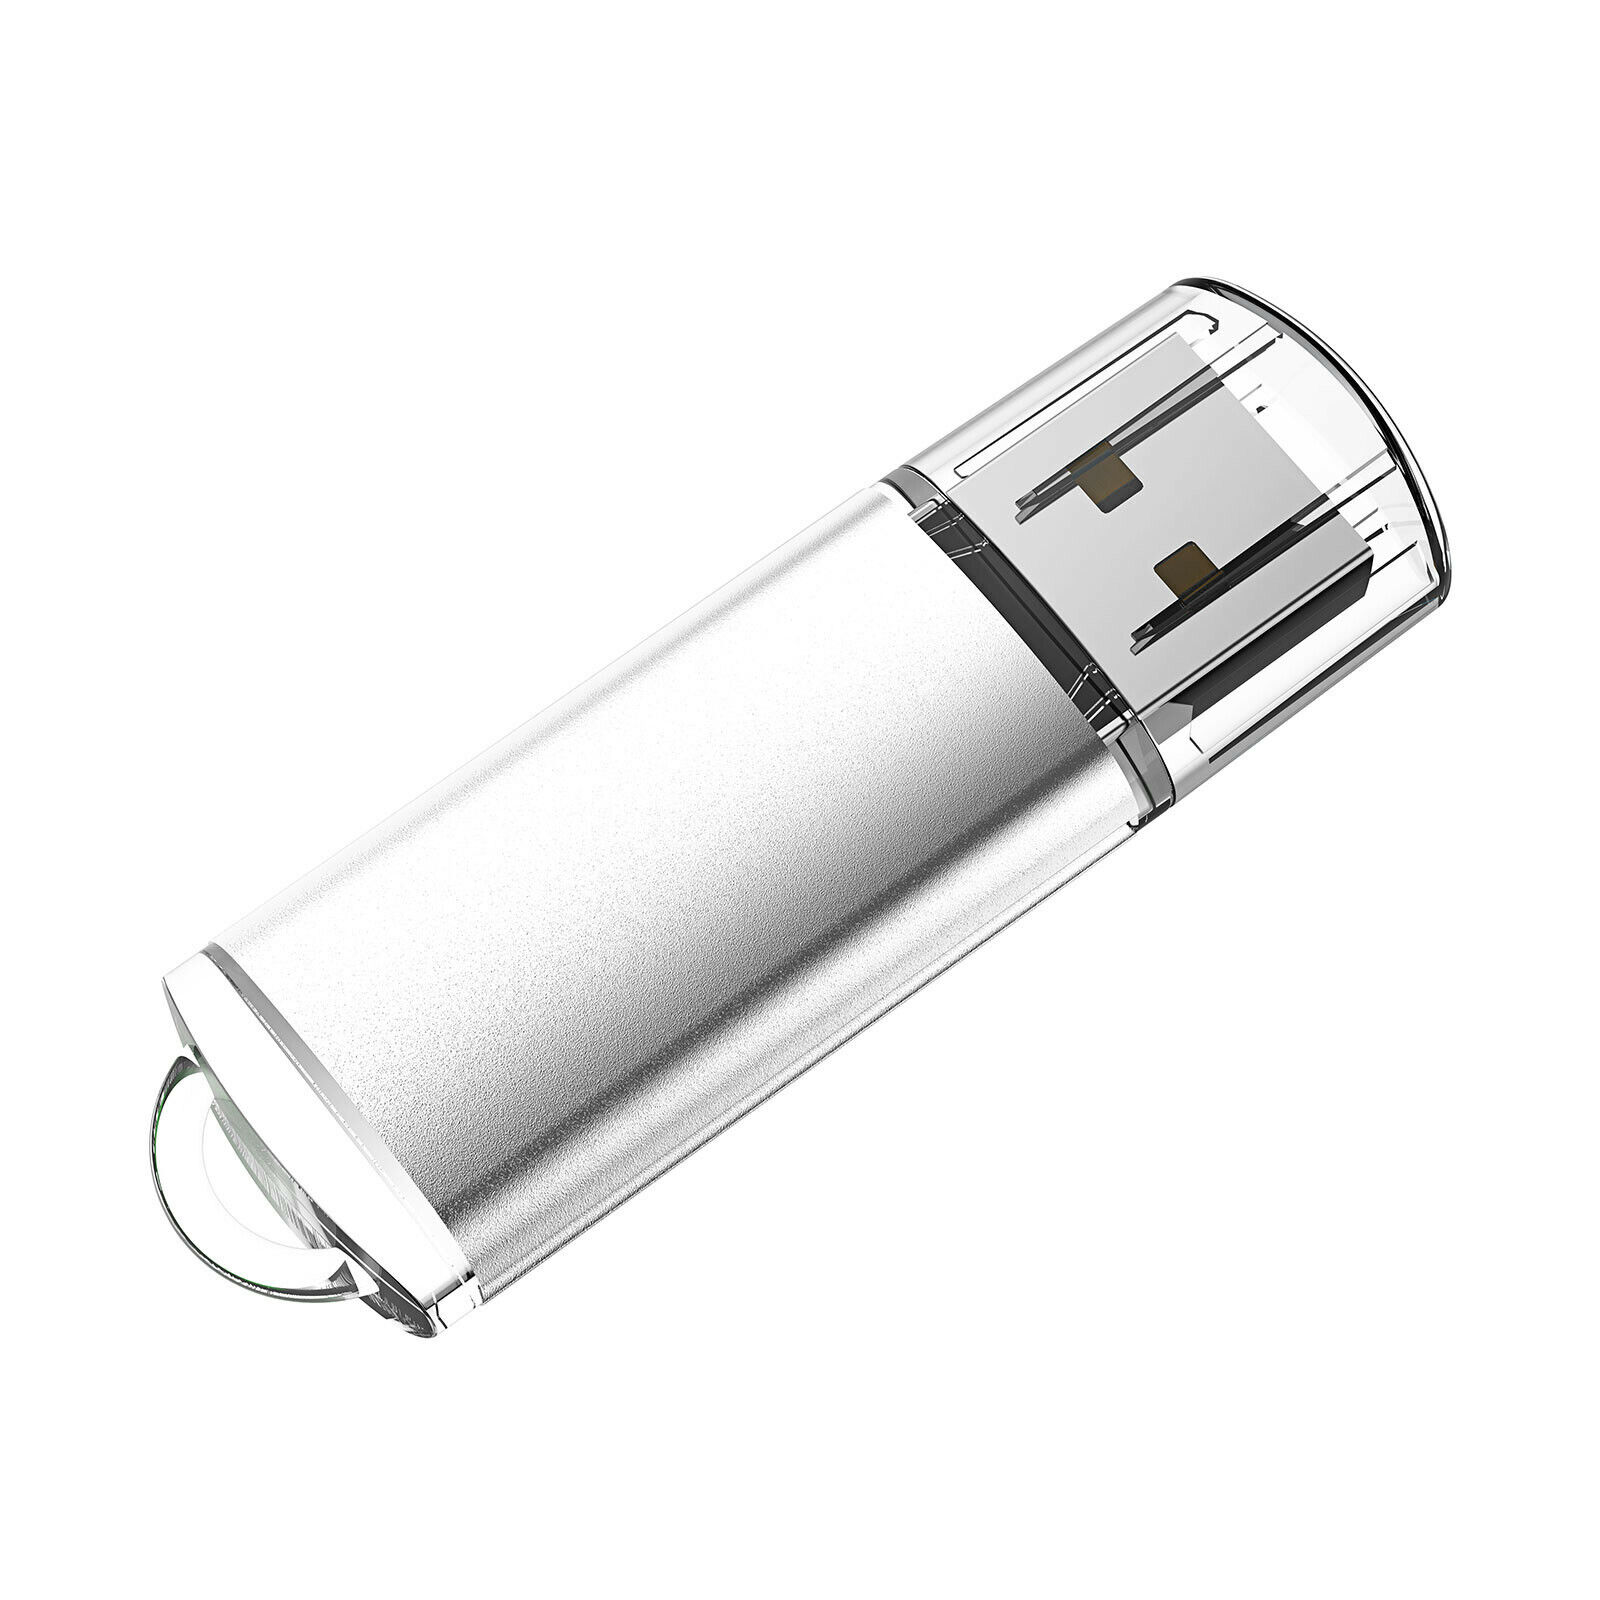 4 Pack 16GB USB 2.0 Flash Drive Memory Stick Thumb Drive Pen Drive Storage Kootion Does not apply - фотография #8